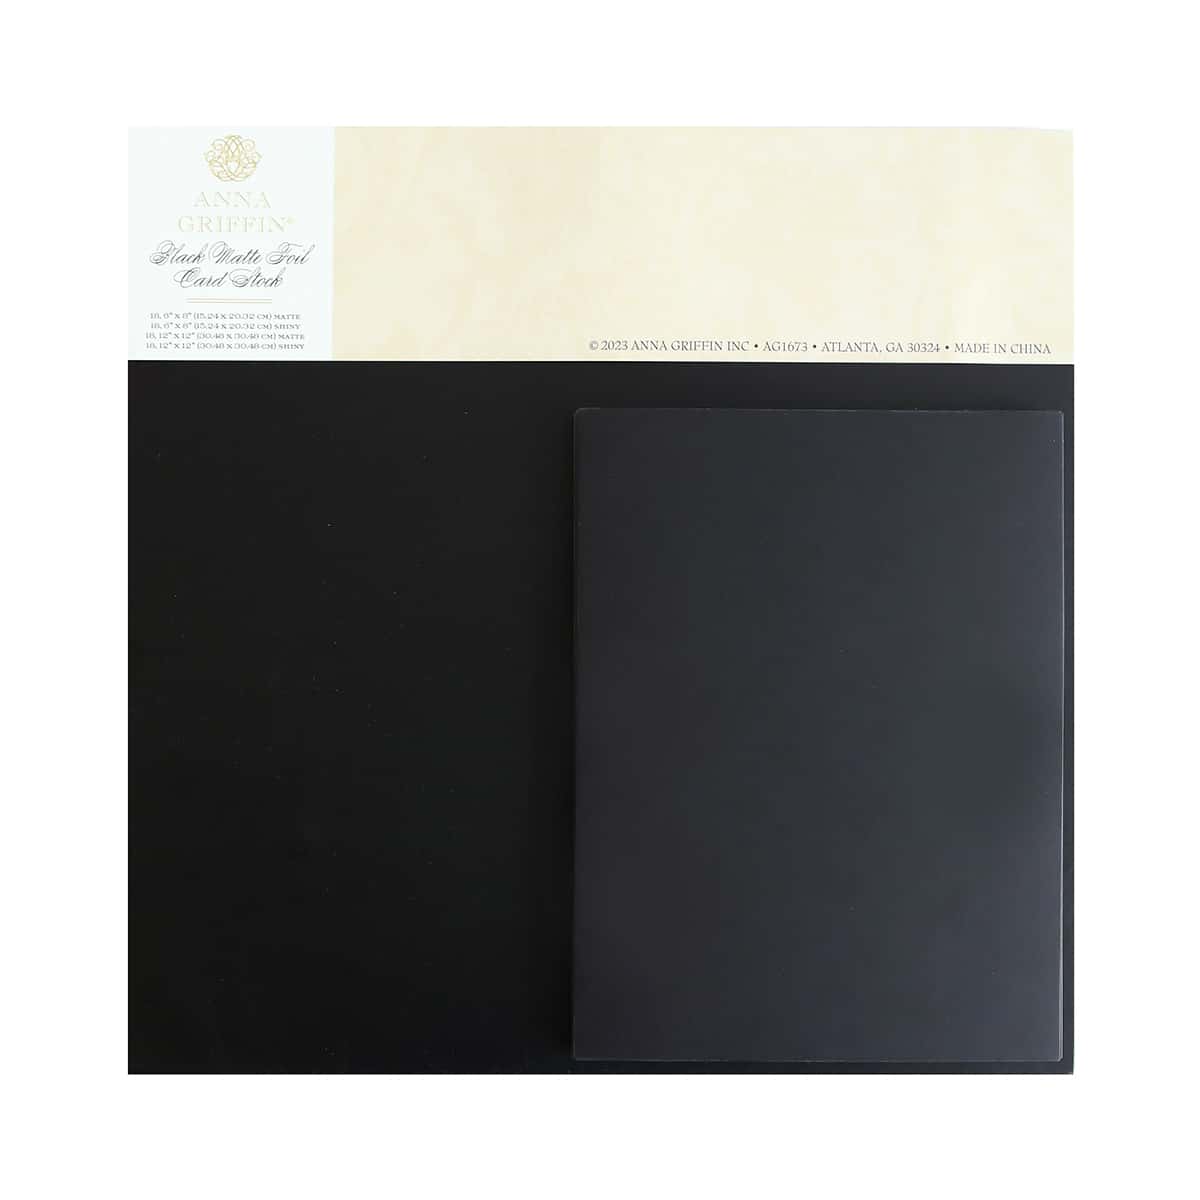 A Black Matte Shiny Foil Cardstock Bundle on a white background.